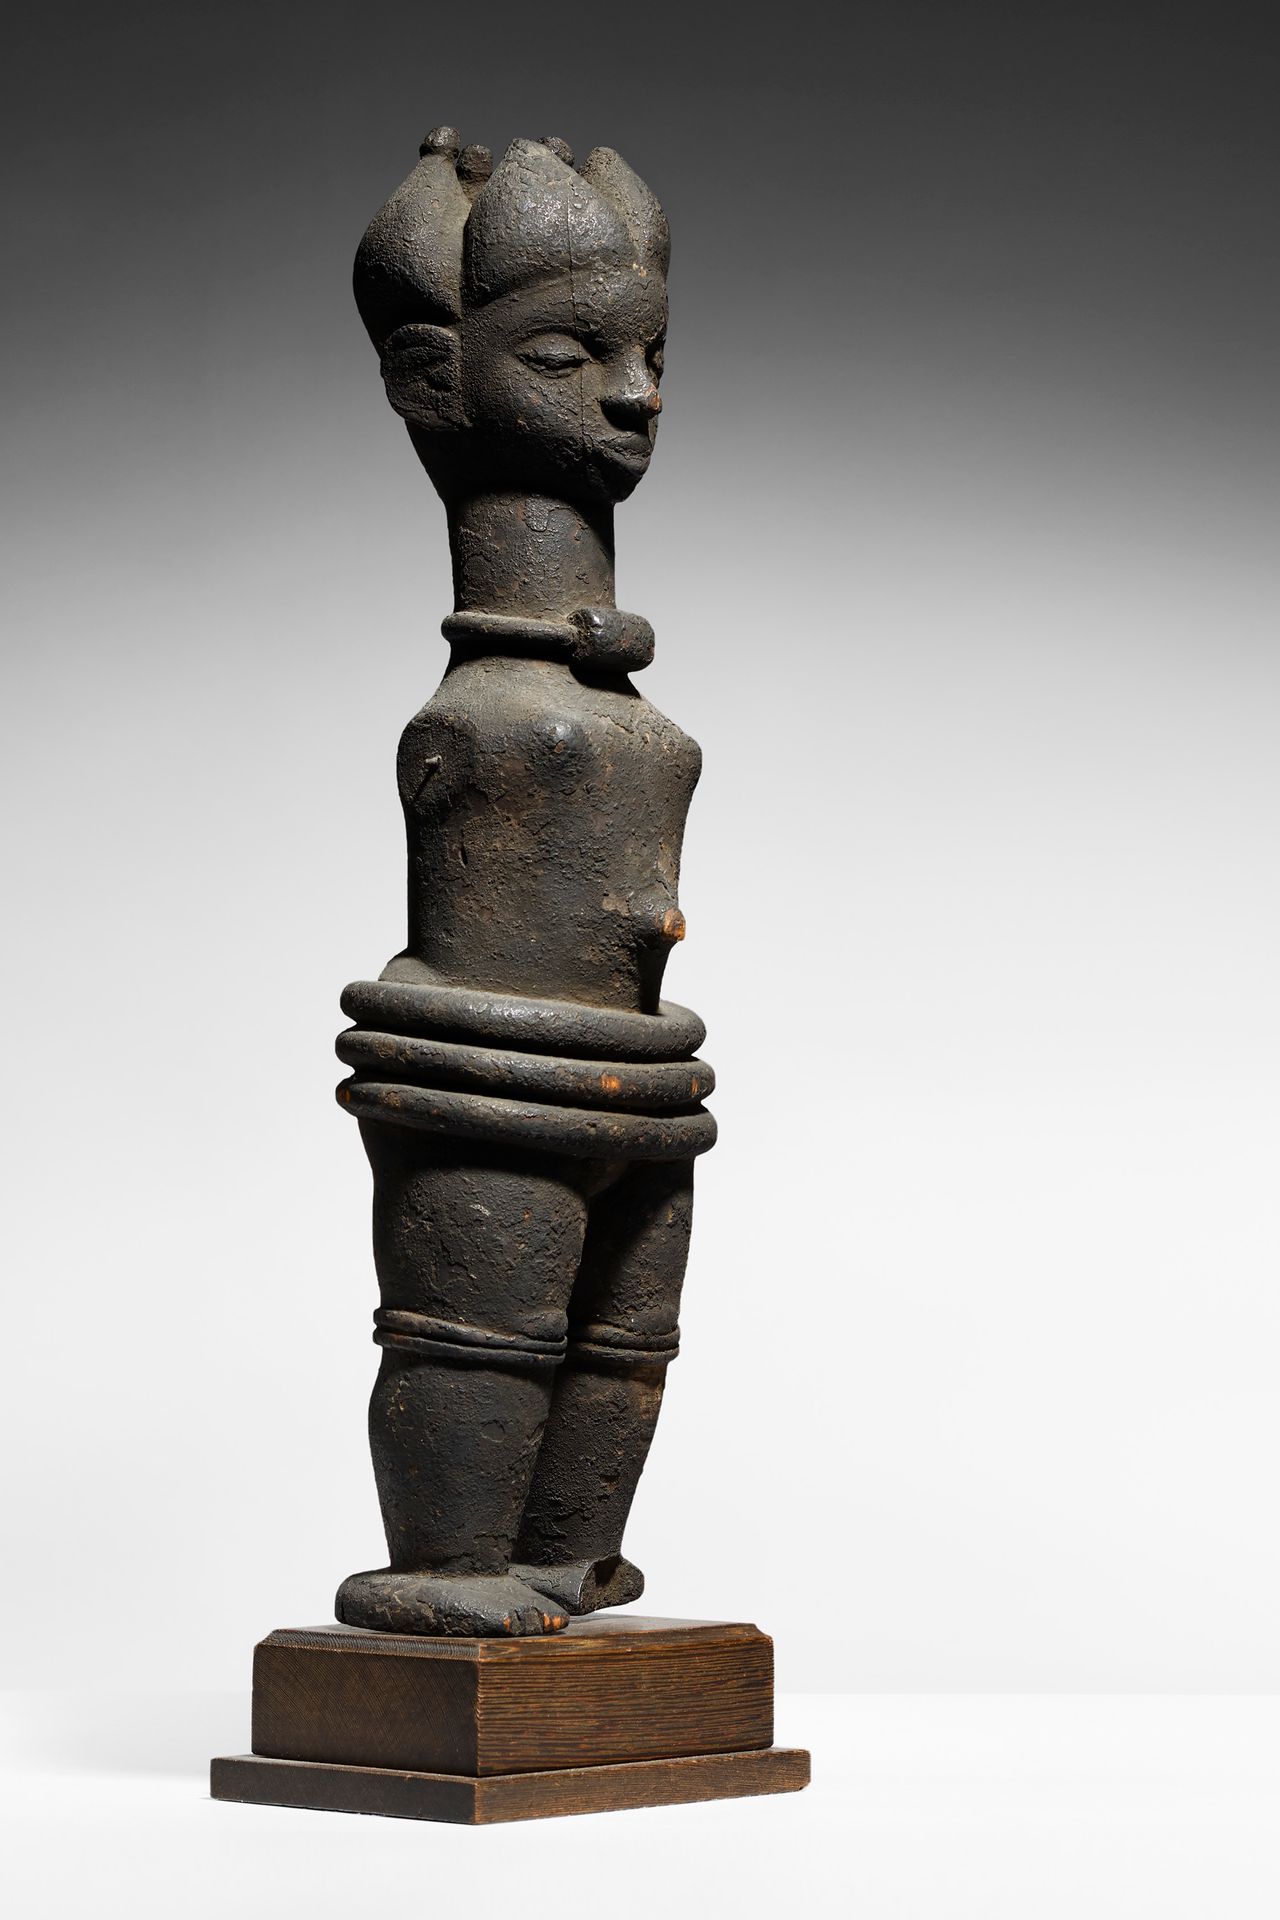 Ibibio Figure Nigeria

Legno - 56 cm

Provenienza:

Hendrik Elias, Wieze

Luc Sa&hellip;